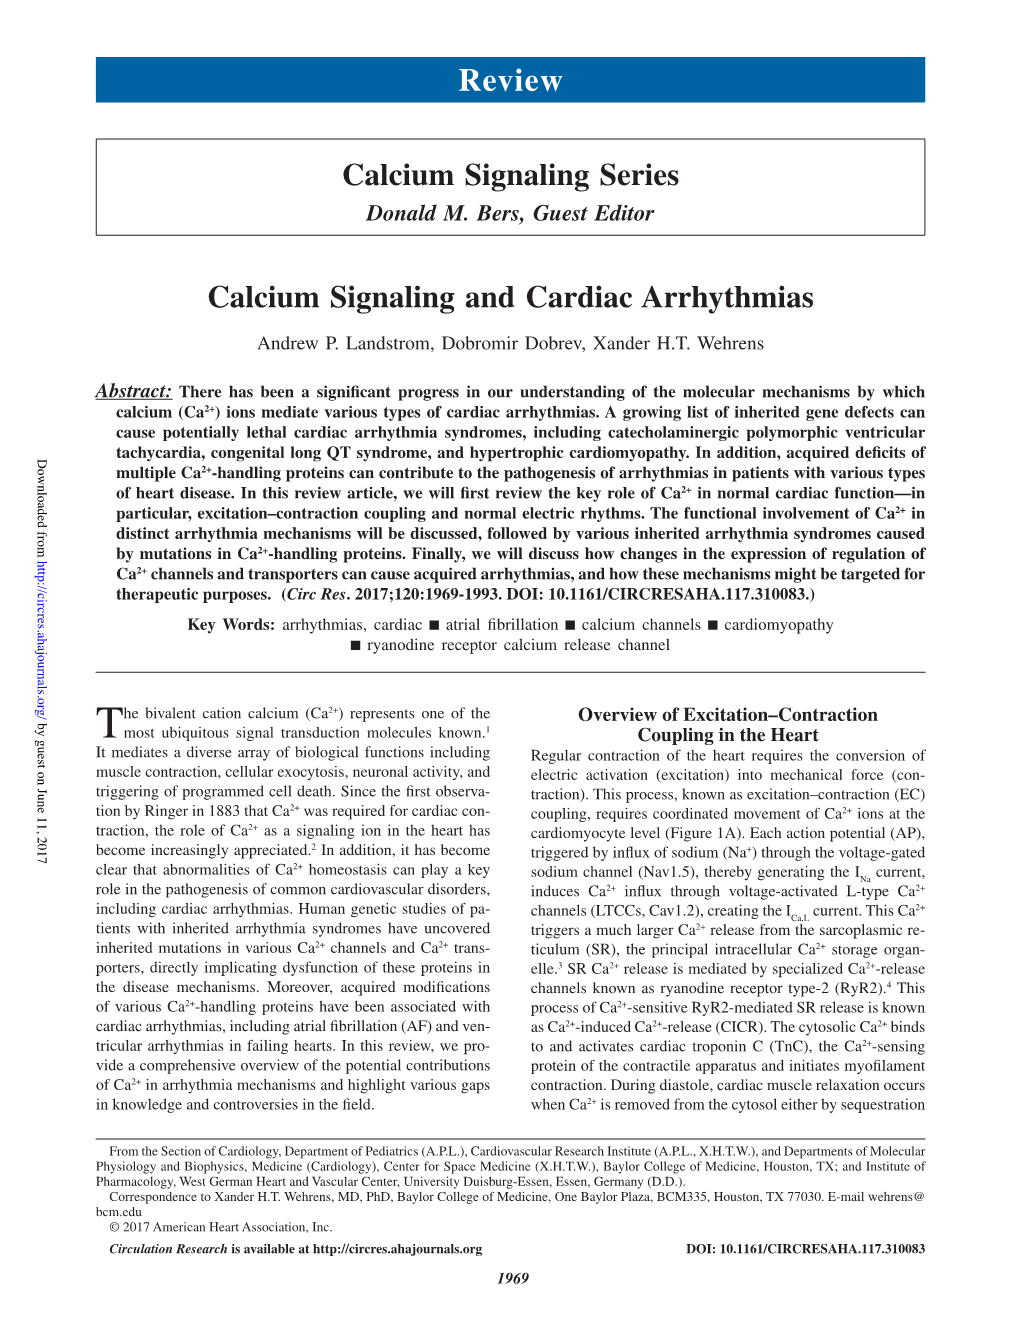 Calcium Signaling and Cardiac Arrhythmias